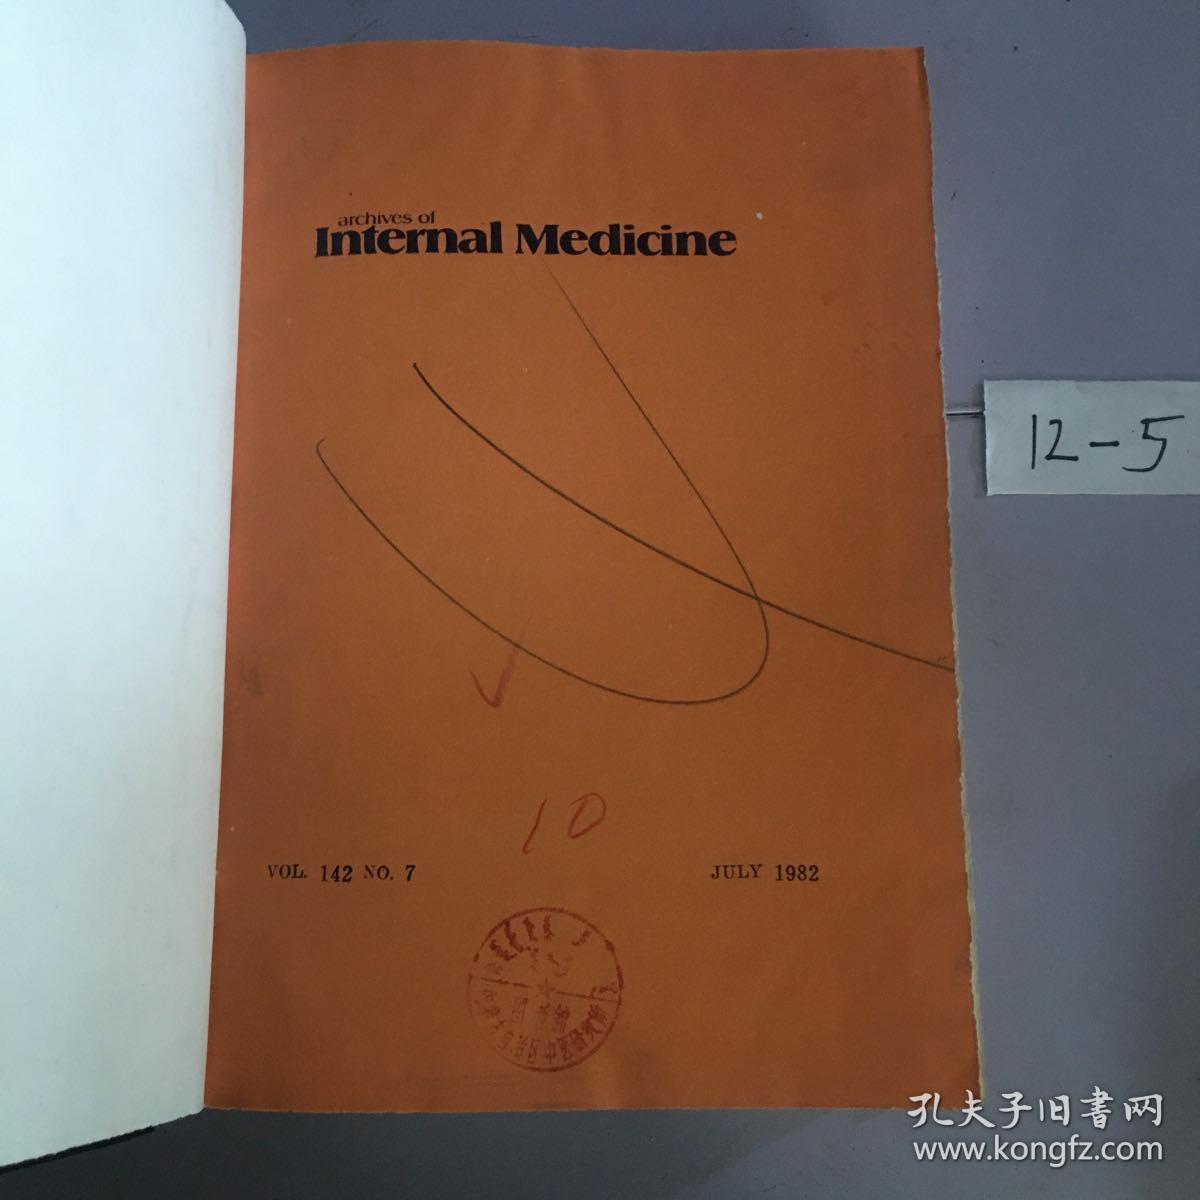 archives of internal medicine vol.142 no.7-13 1982内科学档案